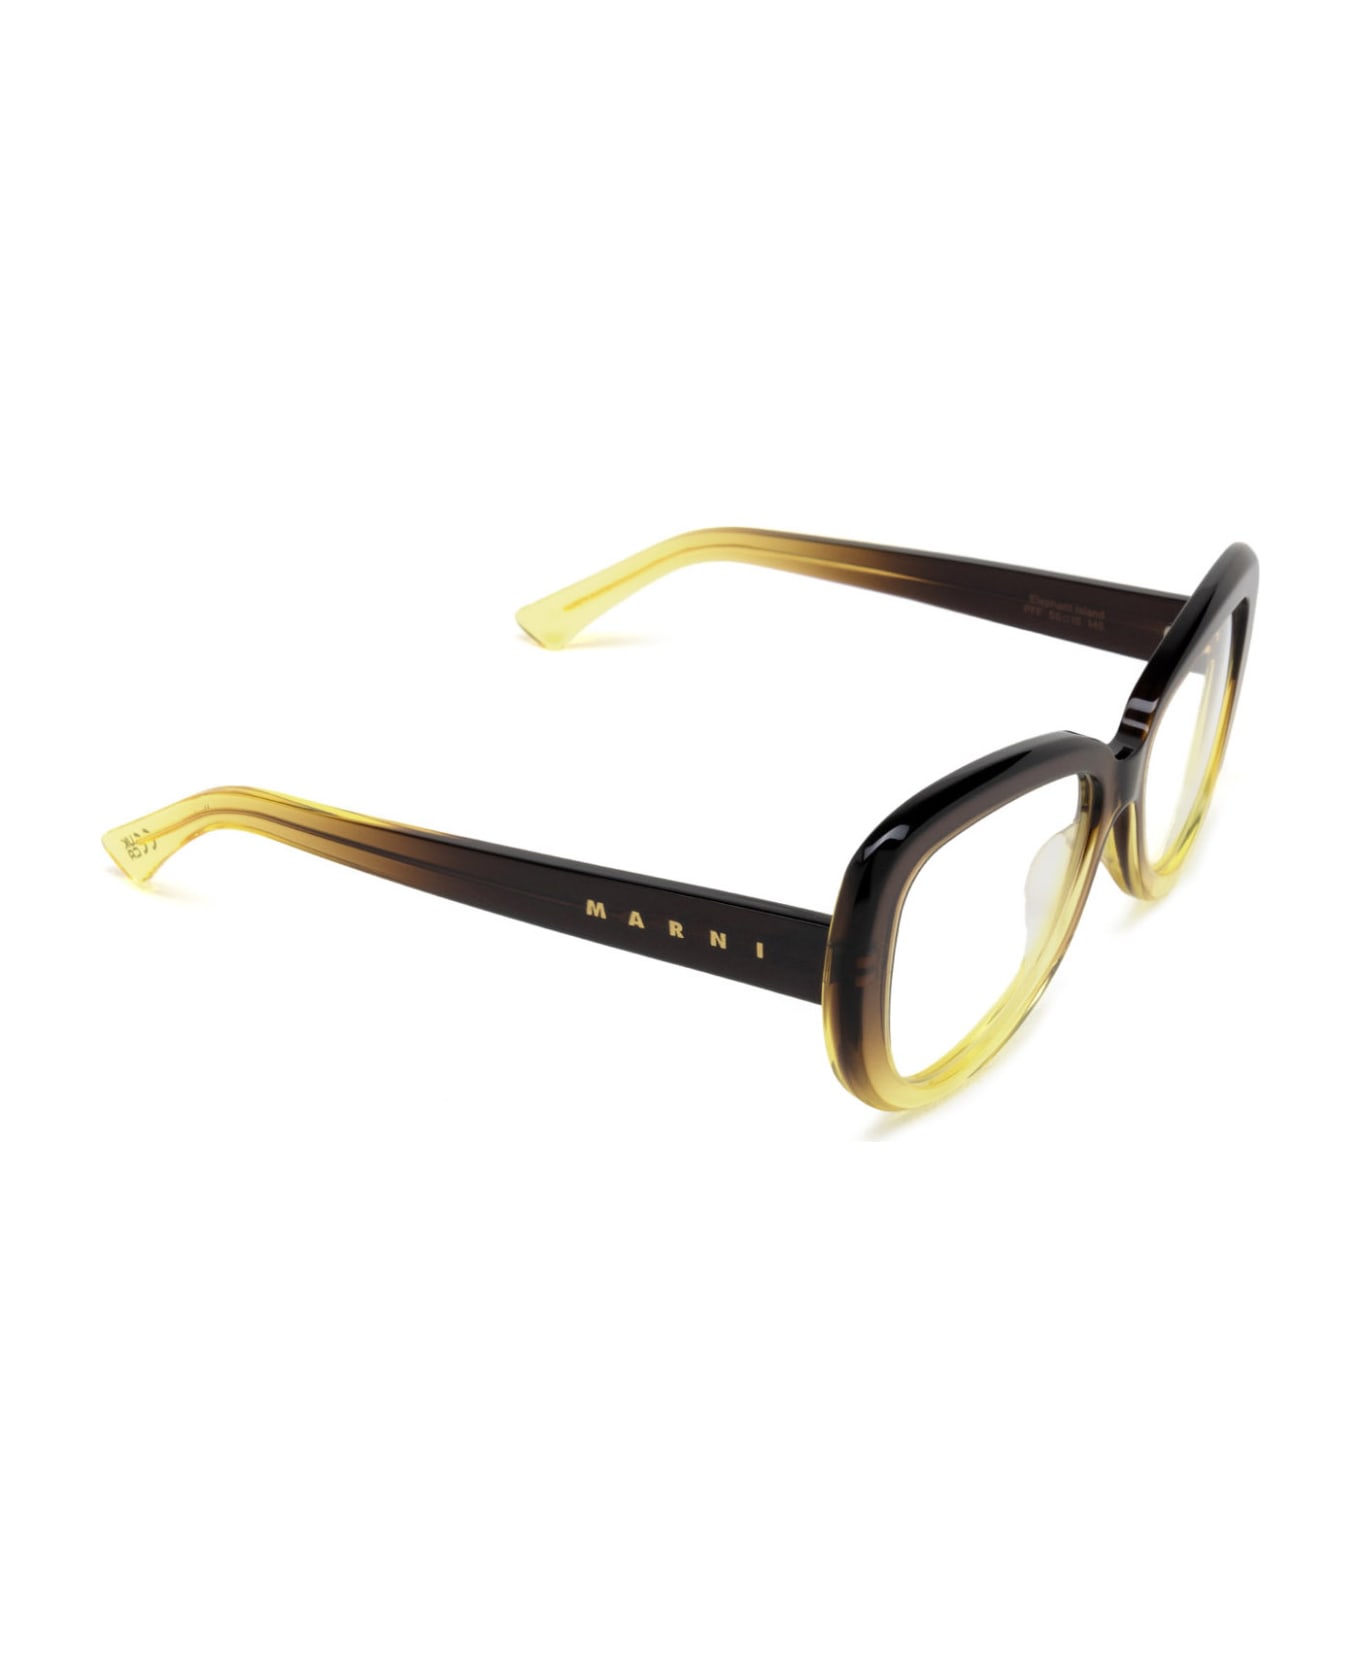 Marni Eyewear Elephant Island Opt Faded Mellow Glasses - Faded Mellow アイウェア